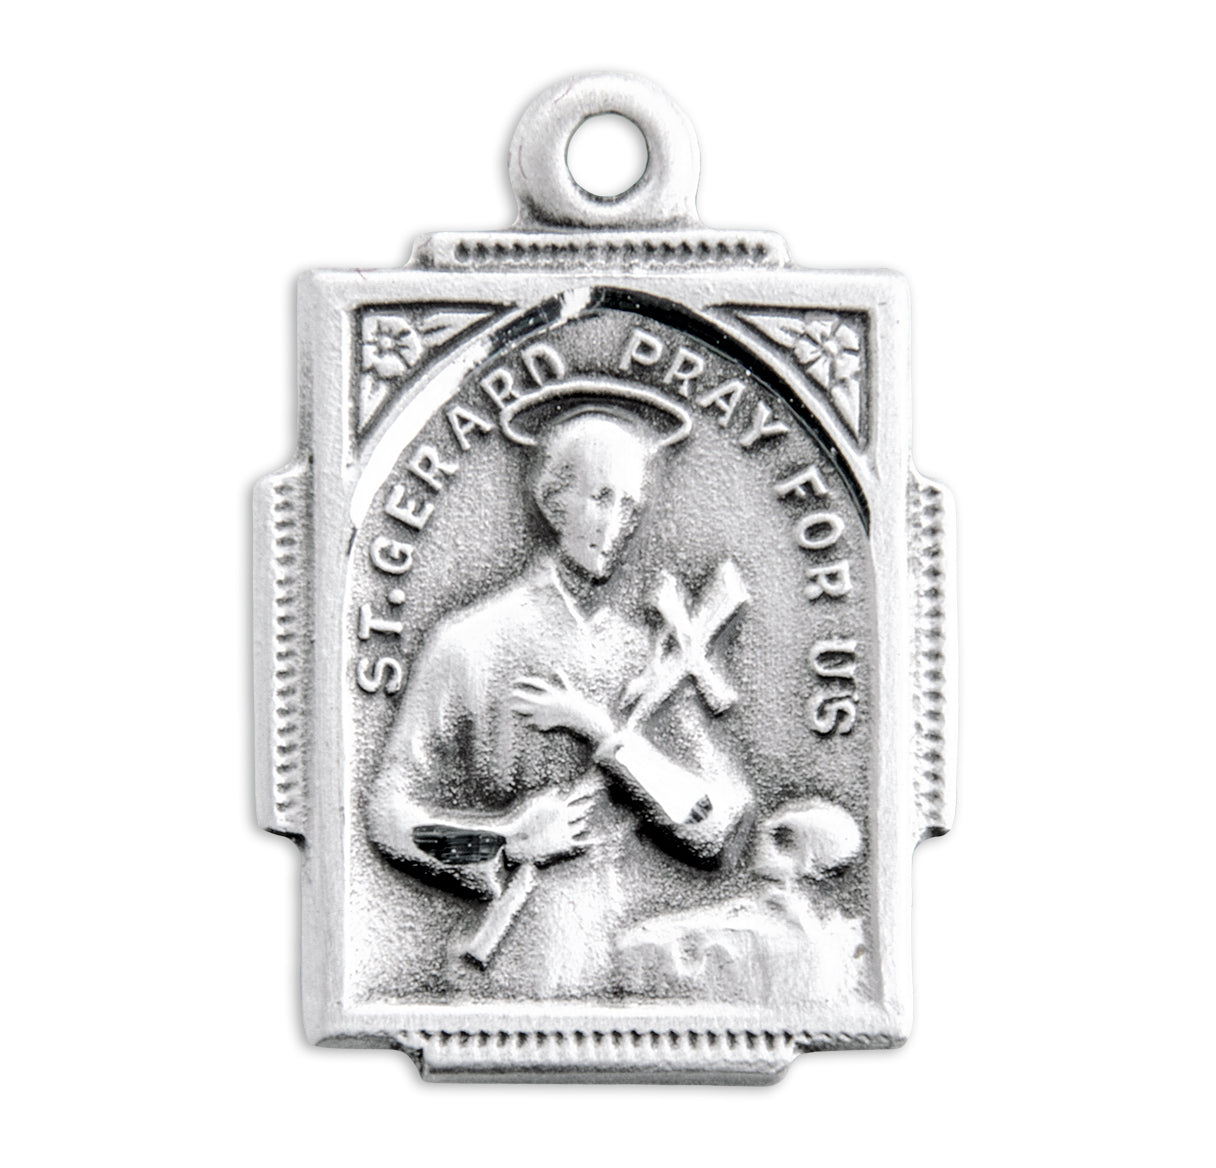 St. Gerard Sterling Silver Medal Necklace